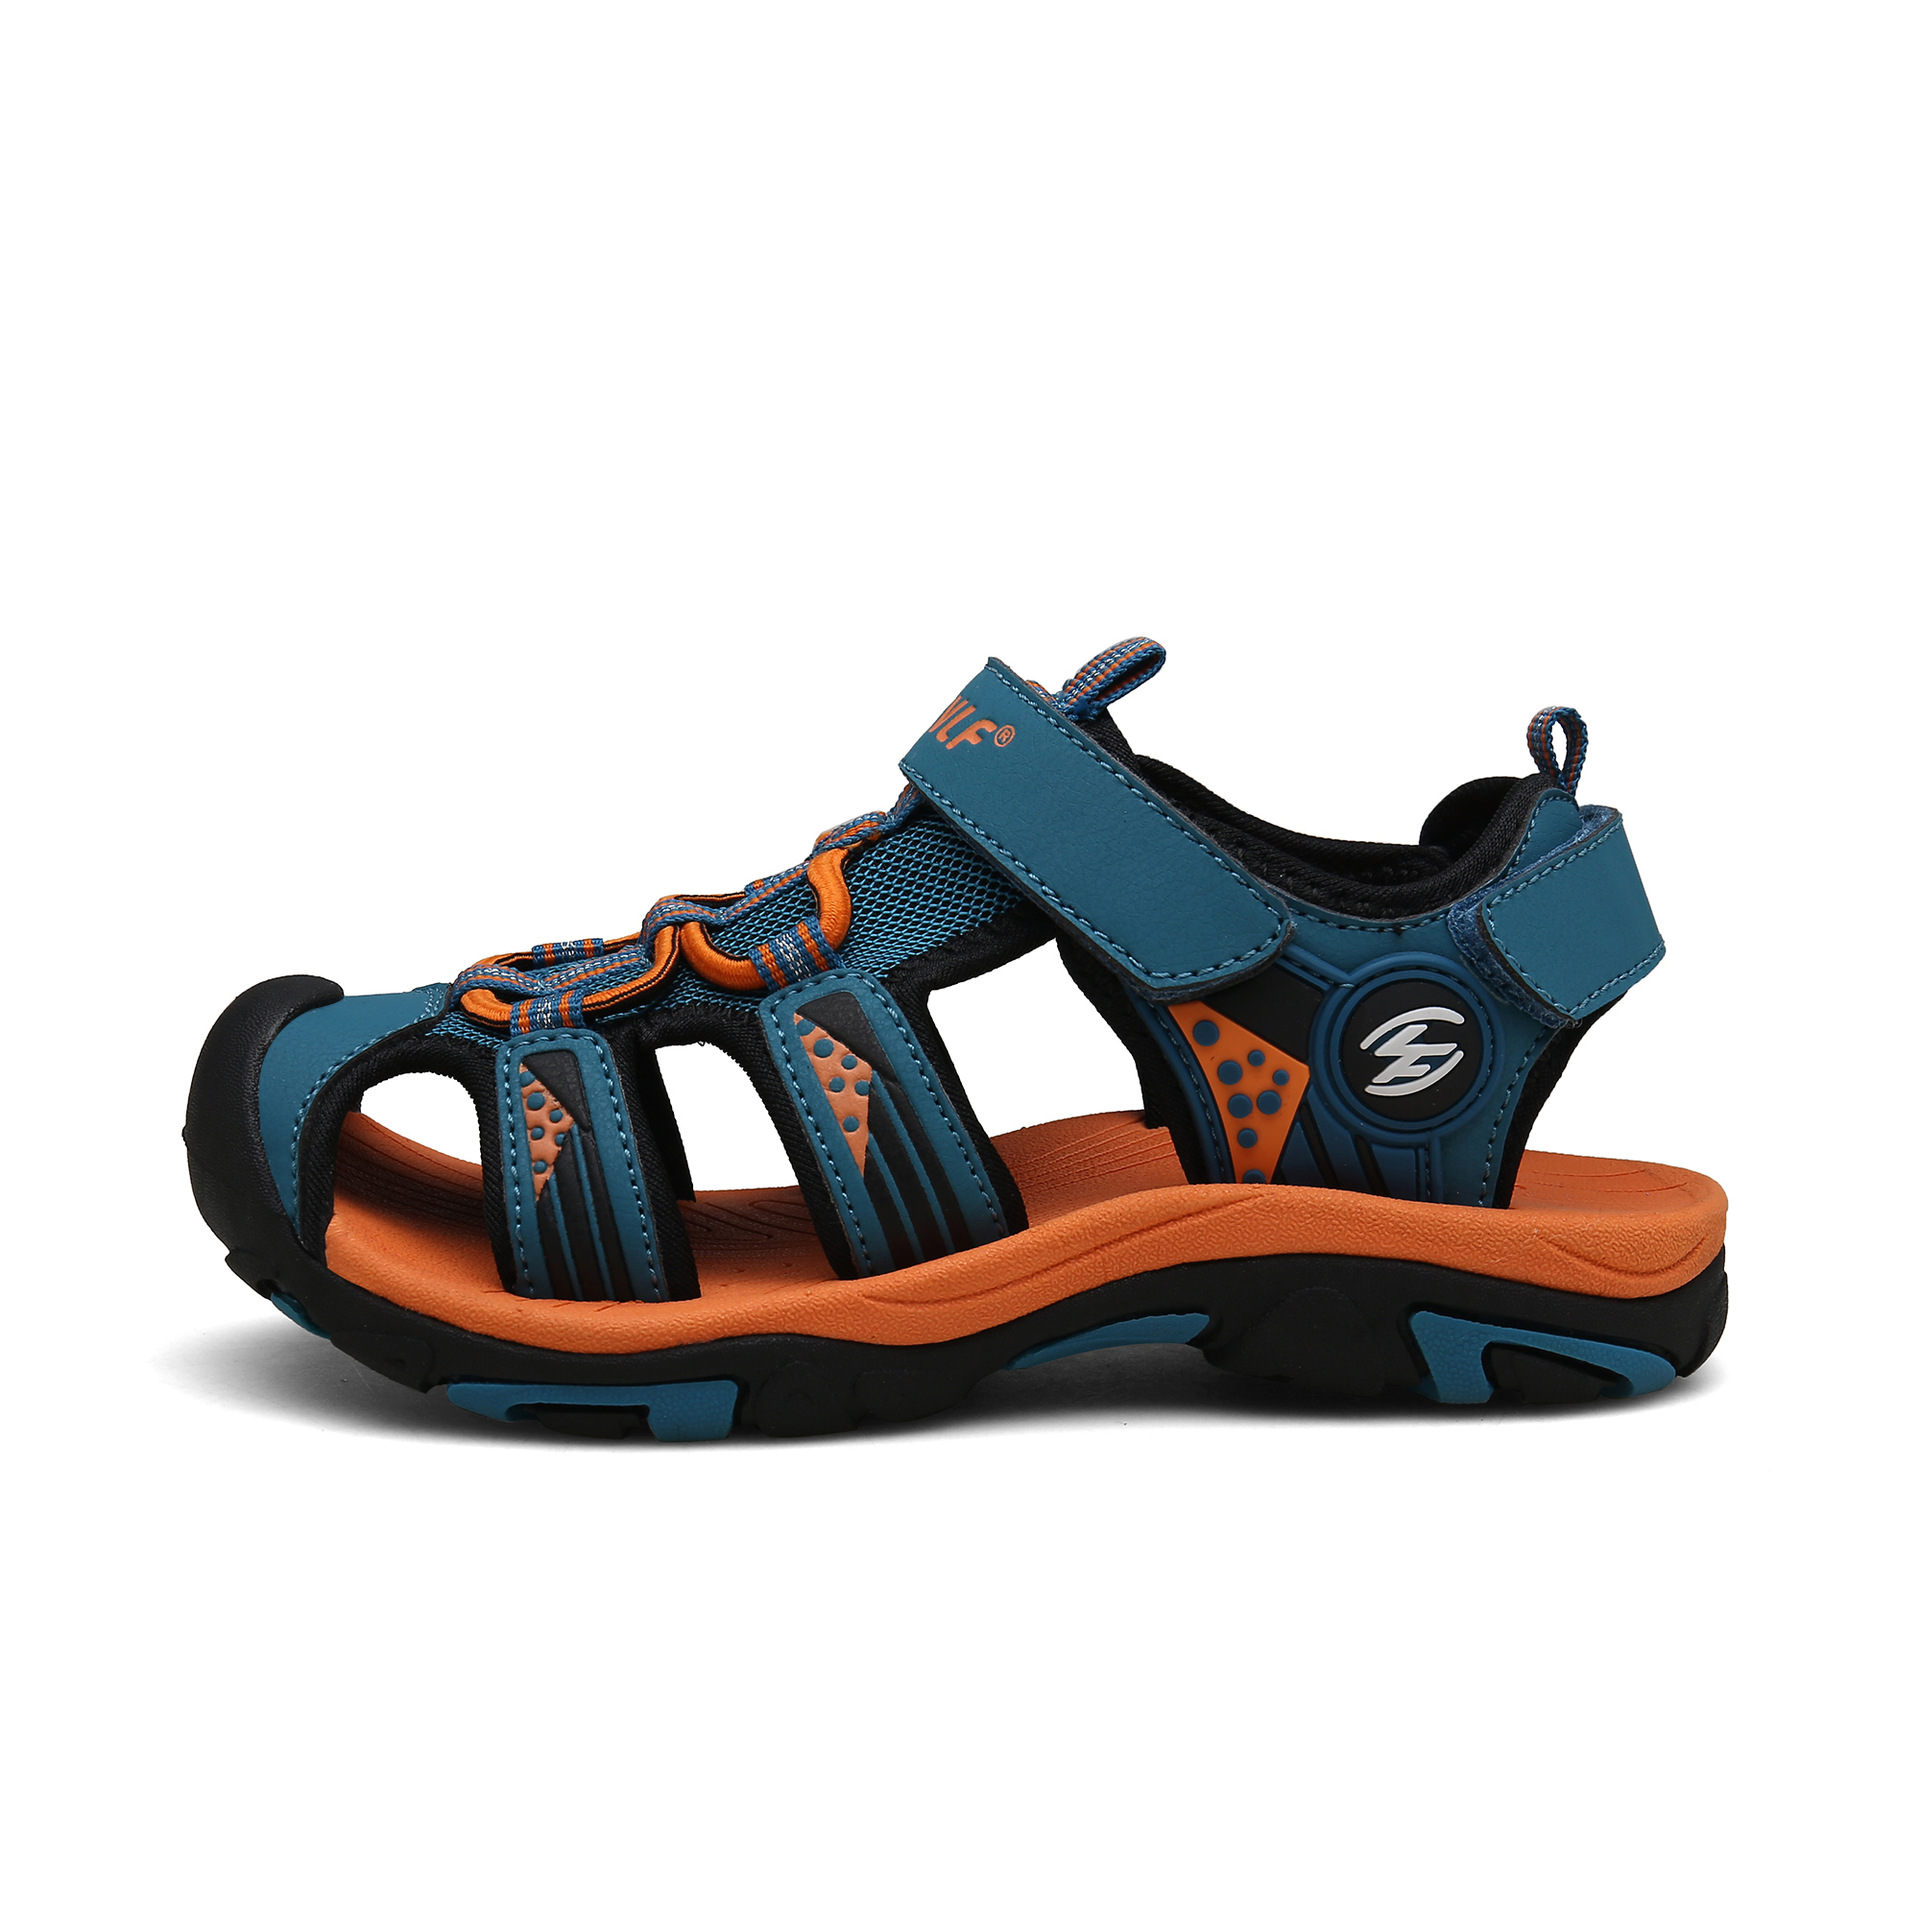 Boys Hiking Sandals - Versatile footwear for different terrains